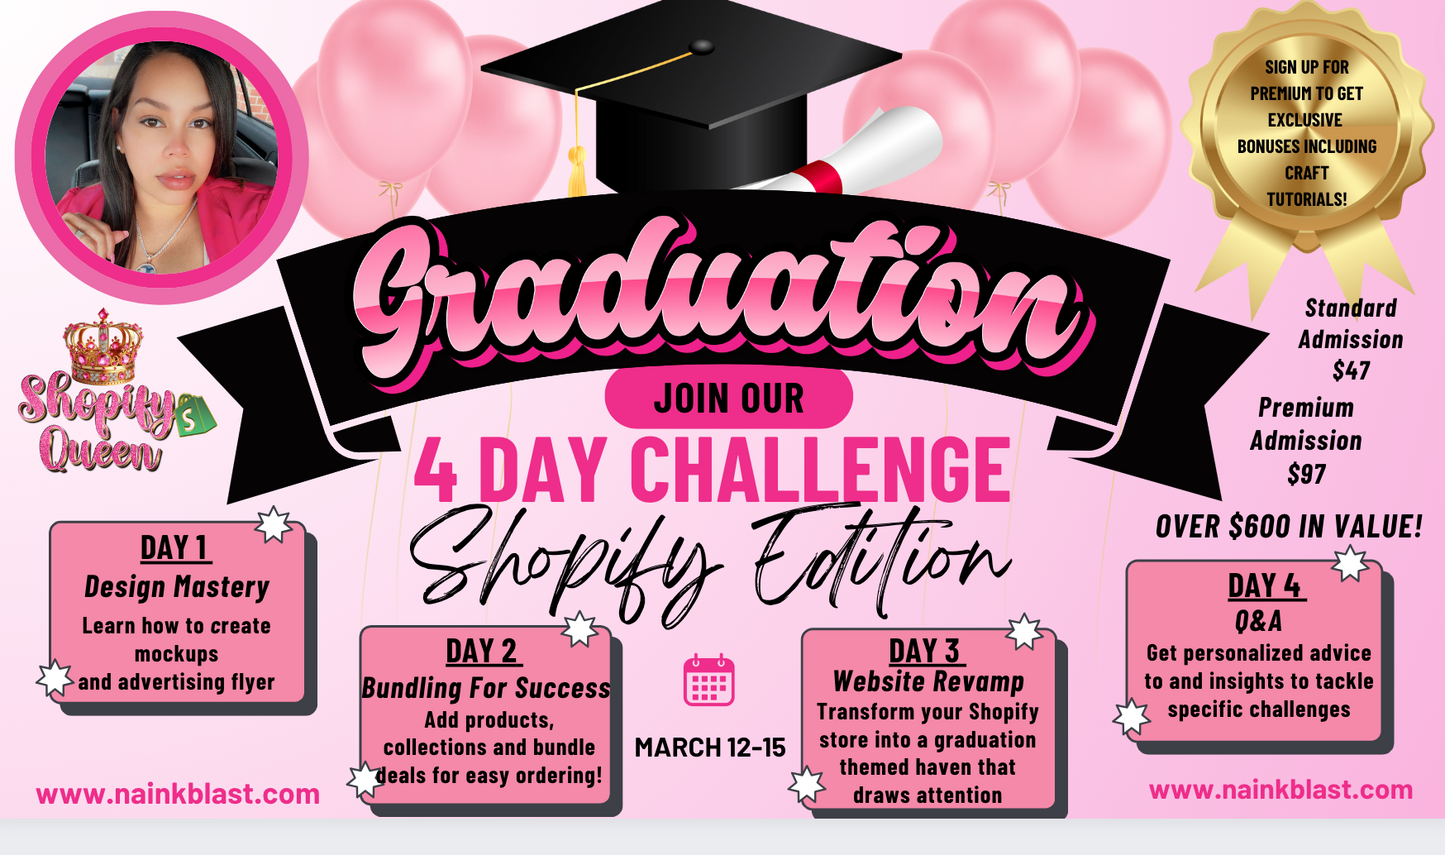 Graduation Challenge SHOPIFY EDITION! REPLAY